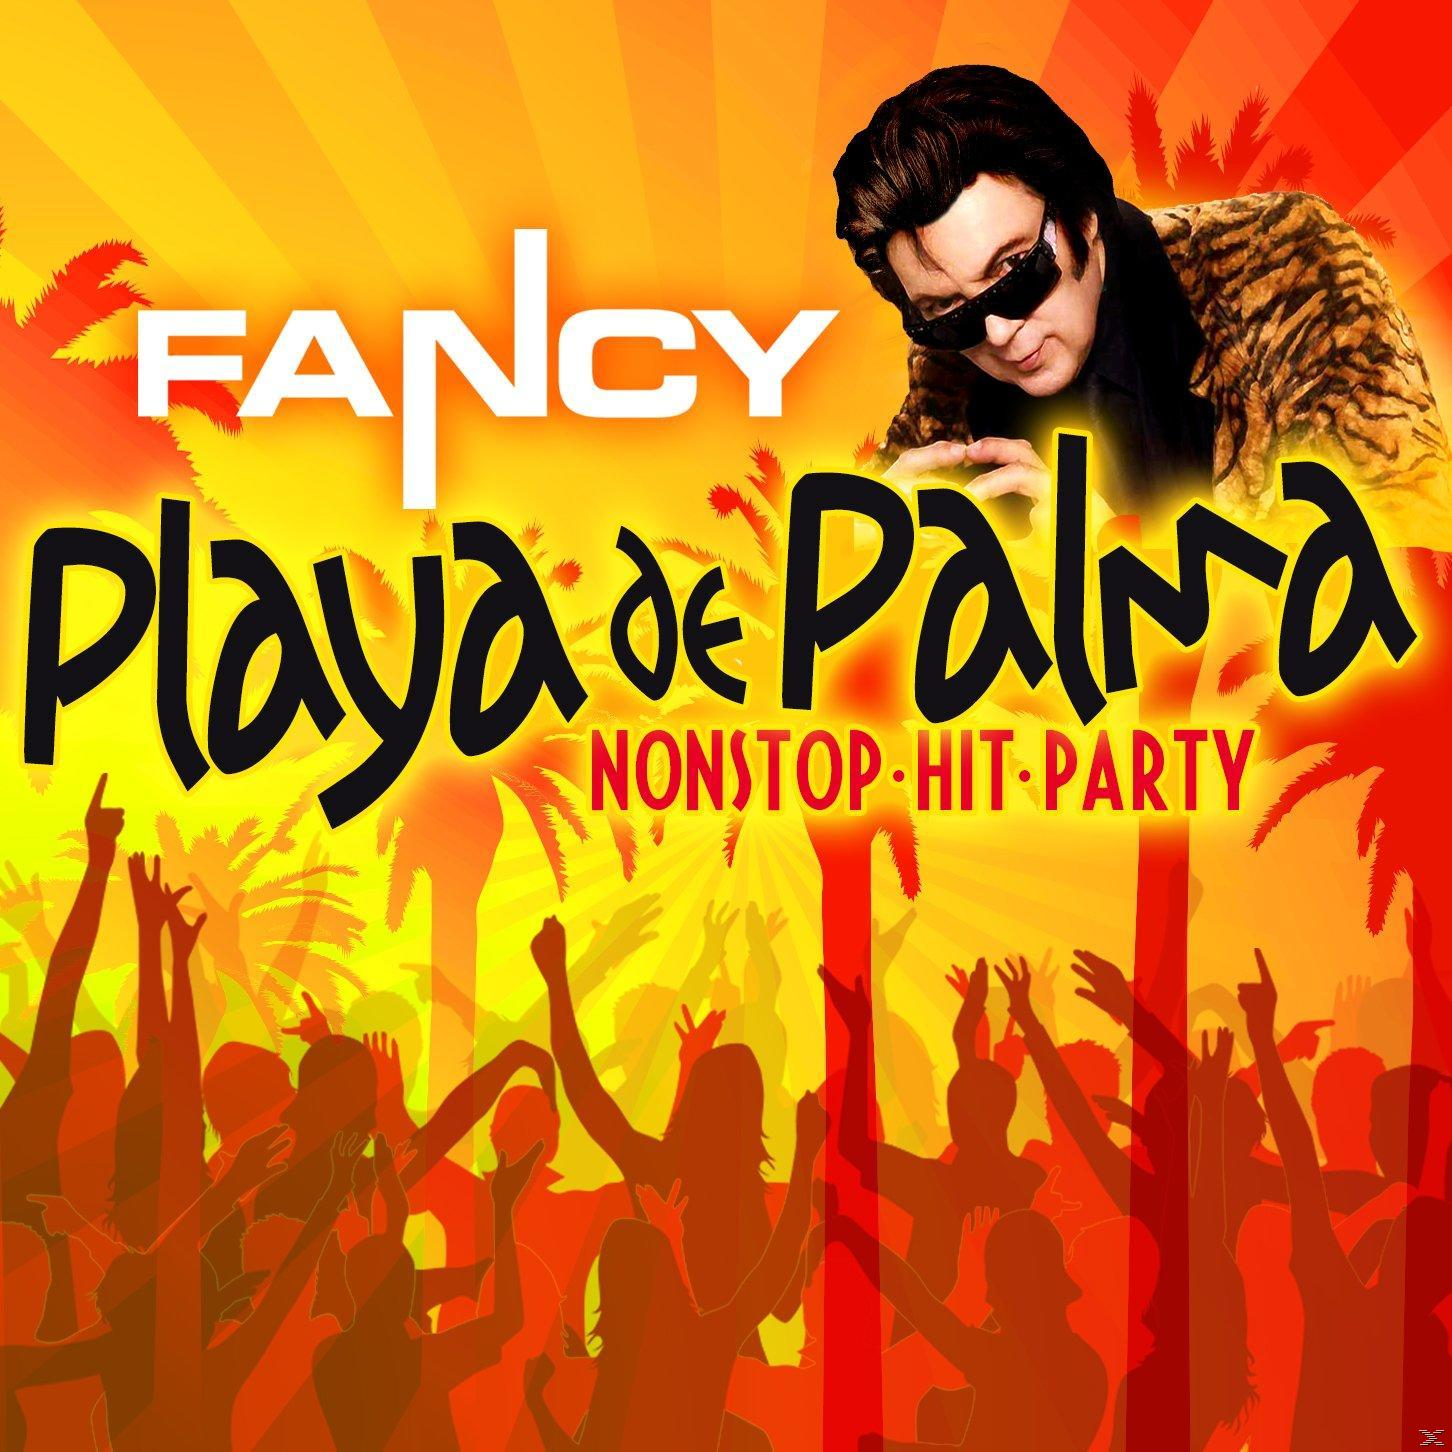 Fancy, Latoya Turner, De Coconut - - Hit-Parade Zabadak (CD) Palma Boys, - Playa Nonstop Band